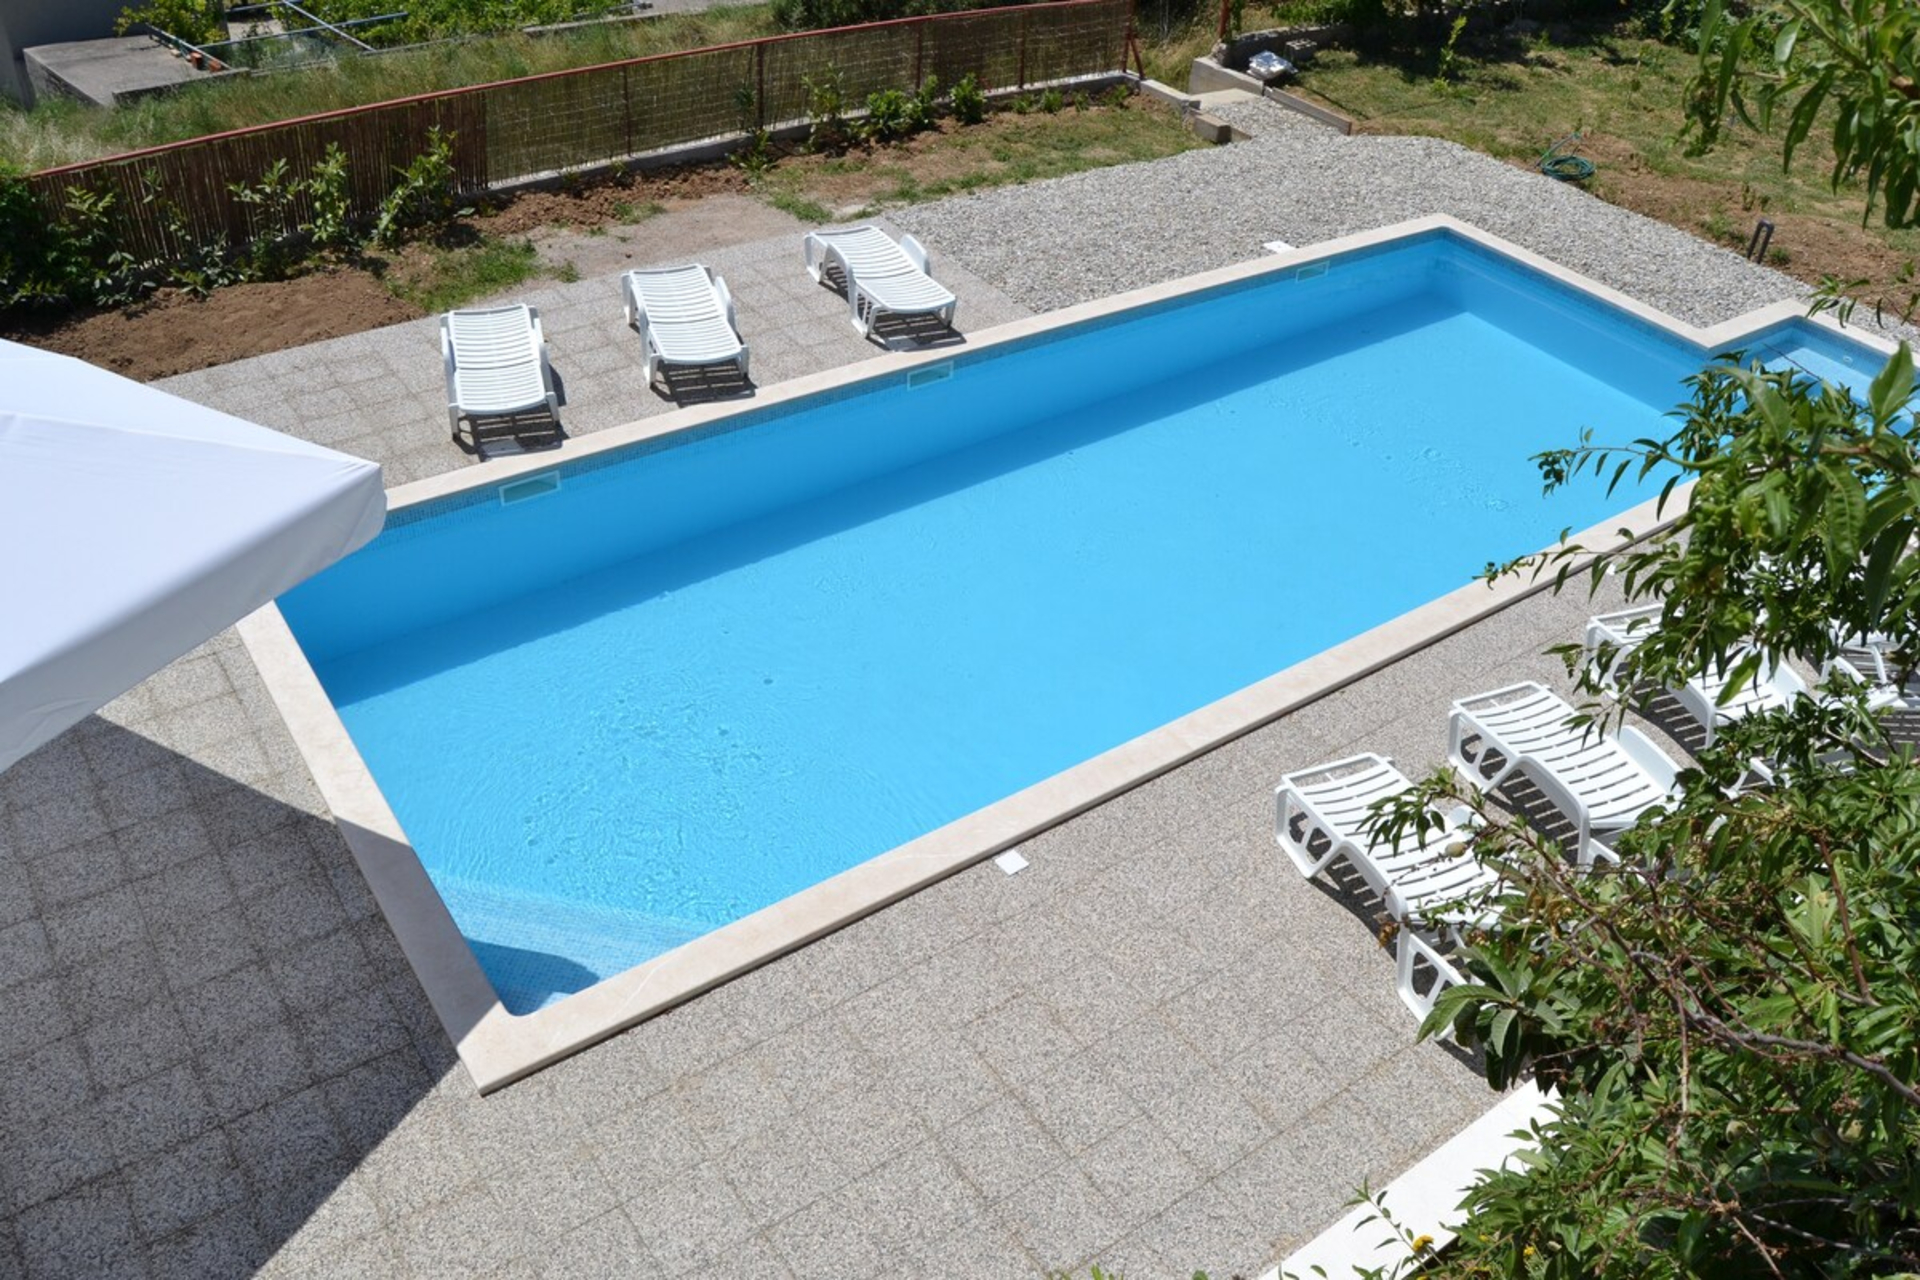 Spacious apartment & swimming pool